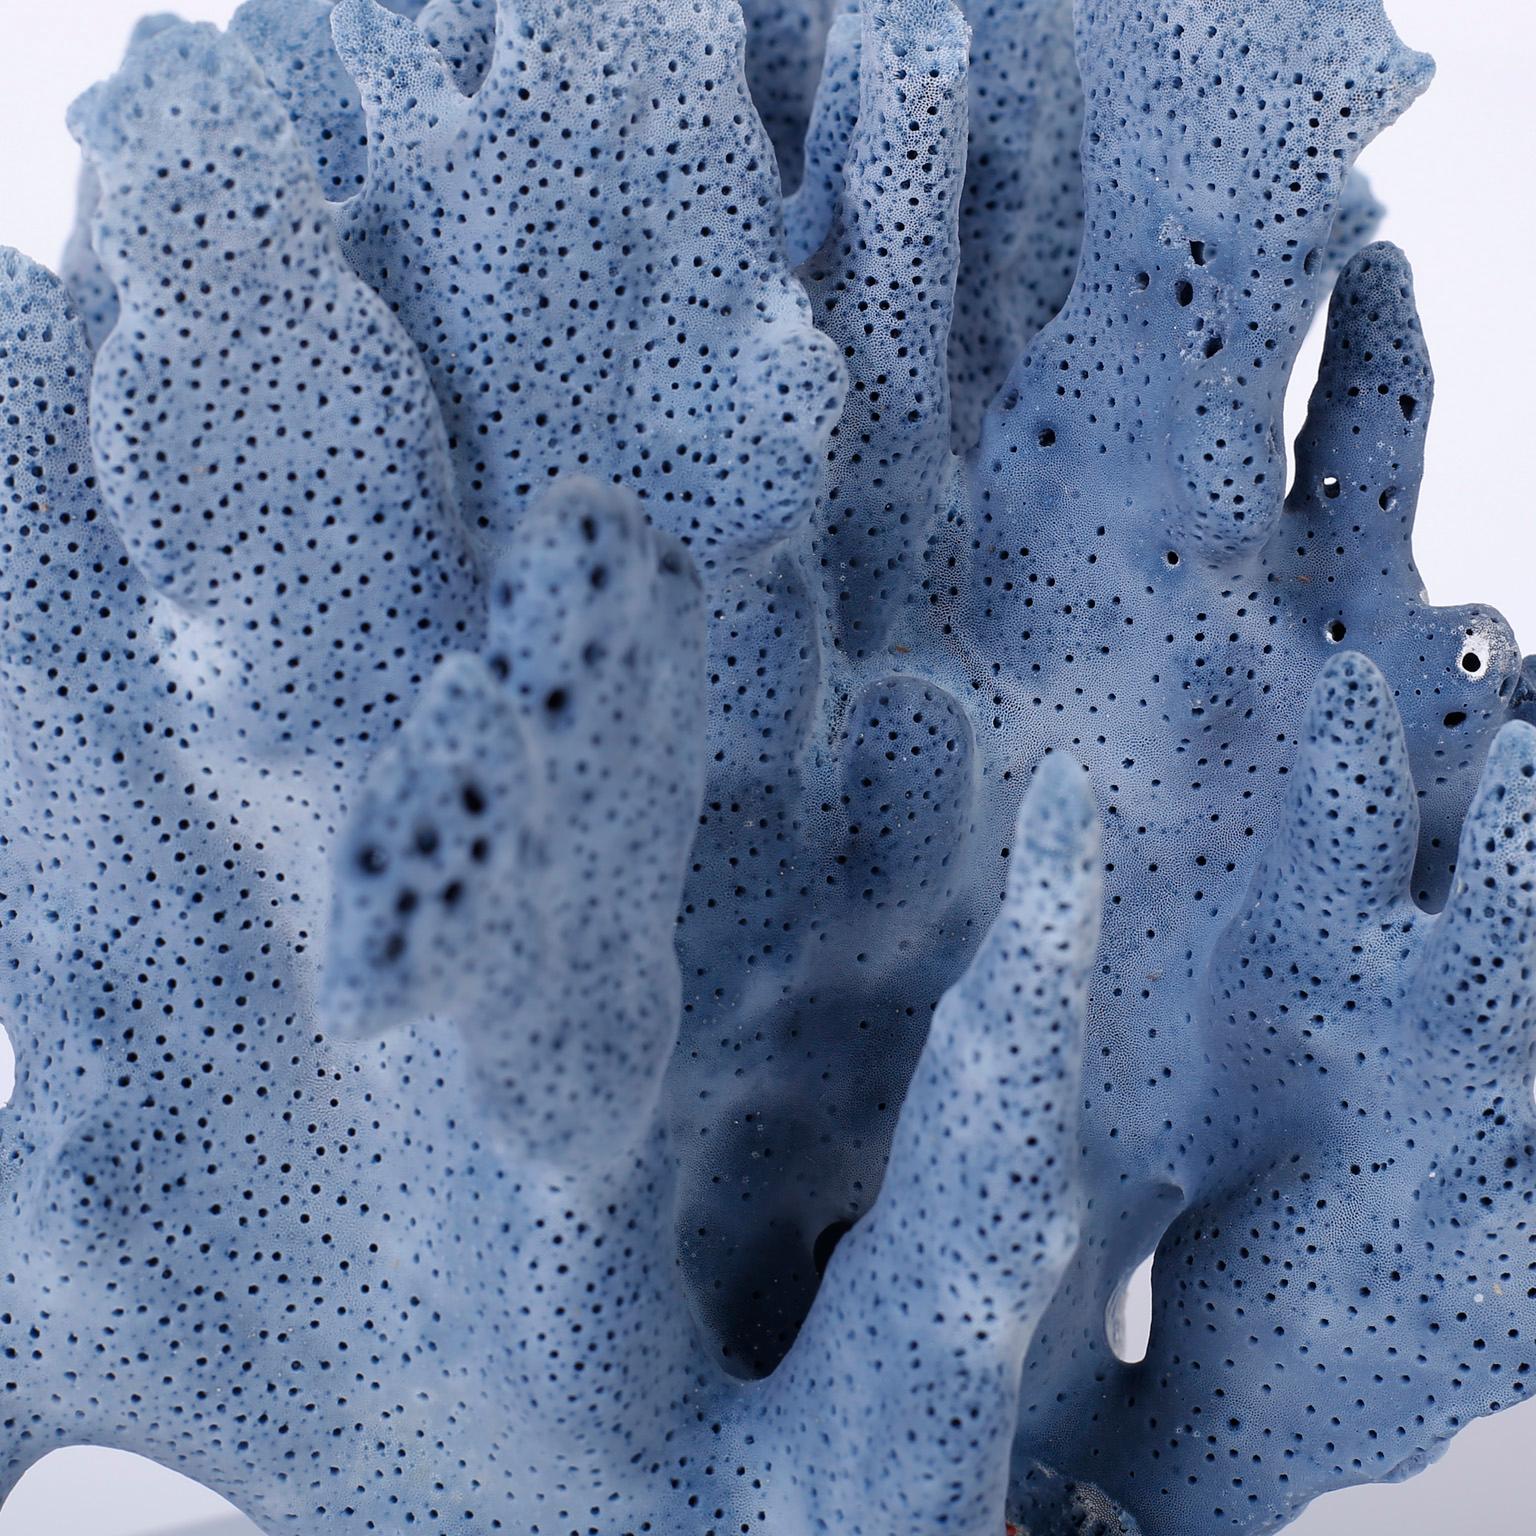 Organic Modern Blue Coral Specimen on Lucite